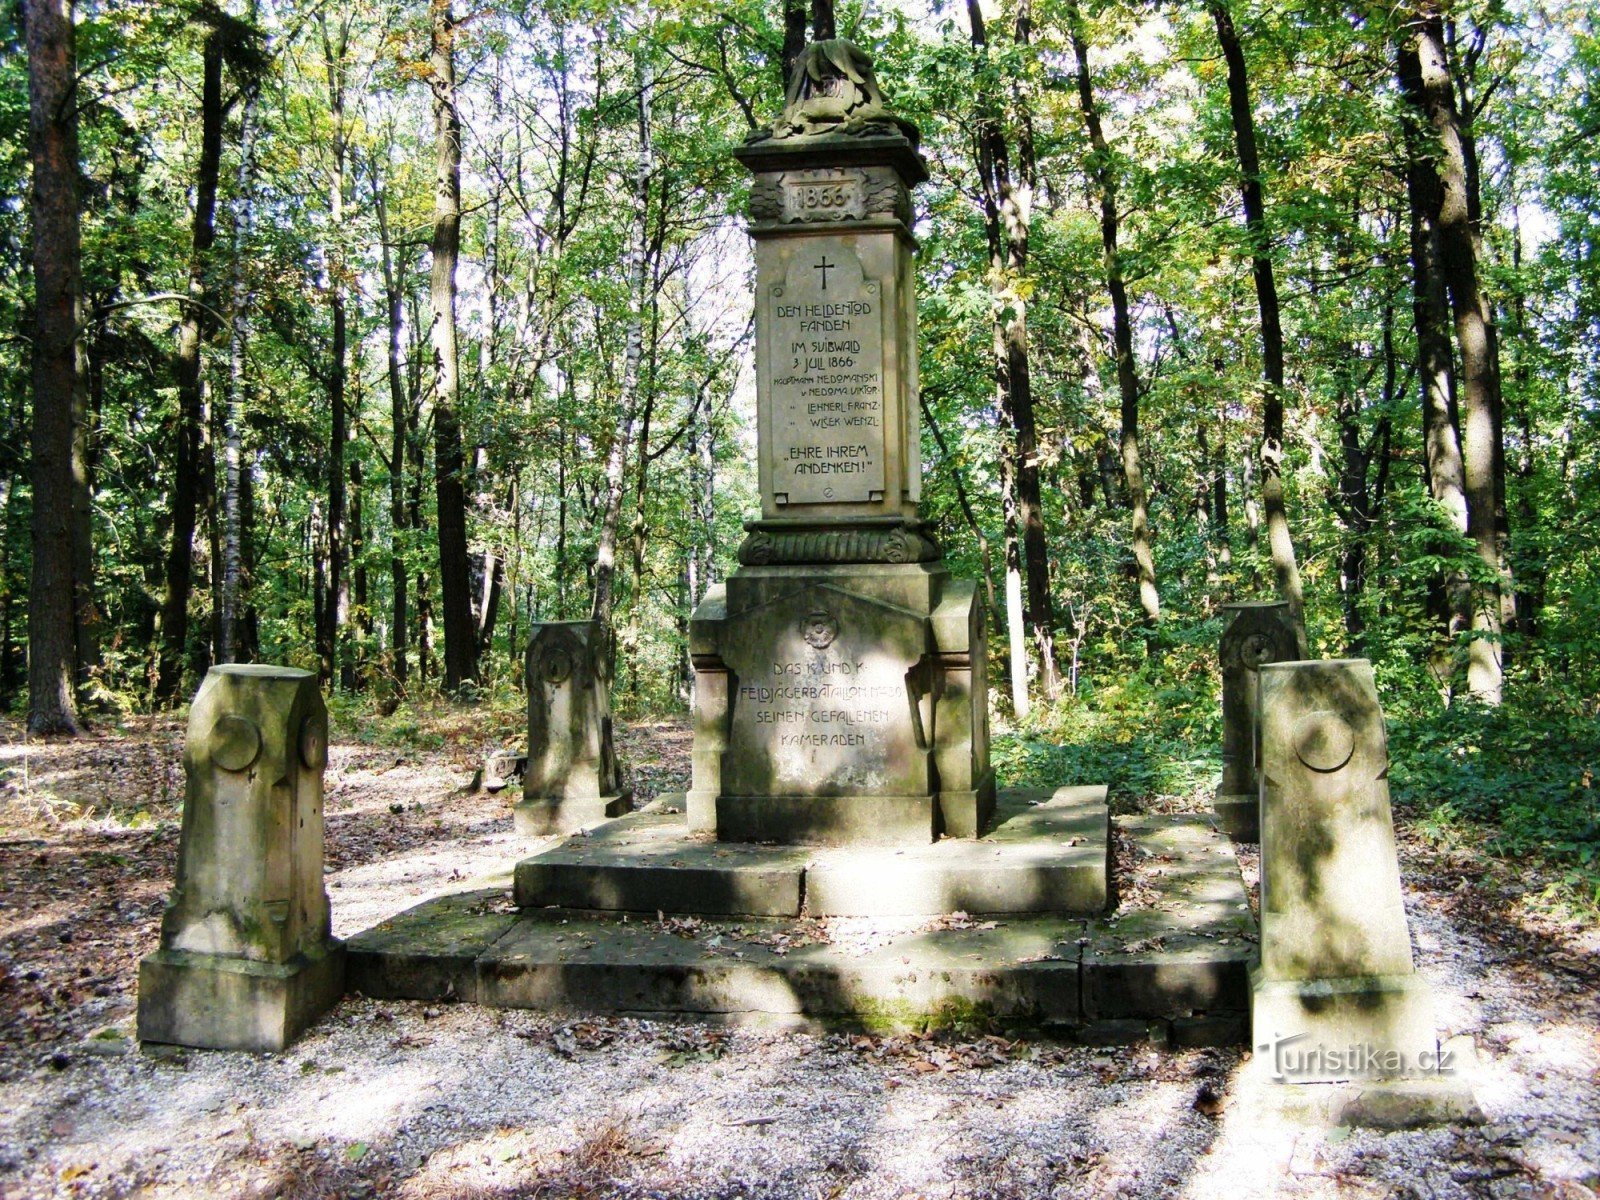 Les Svíb - Σοκάκι των νεκρών, μνημείο